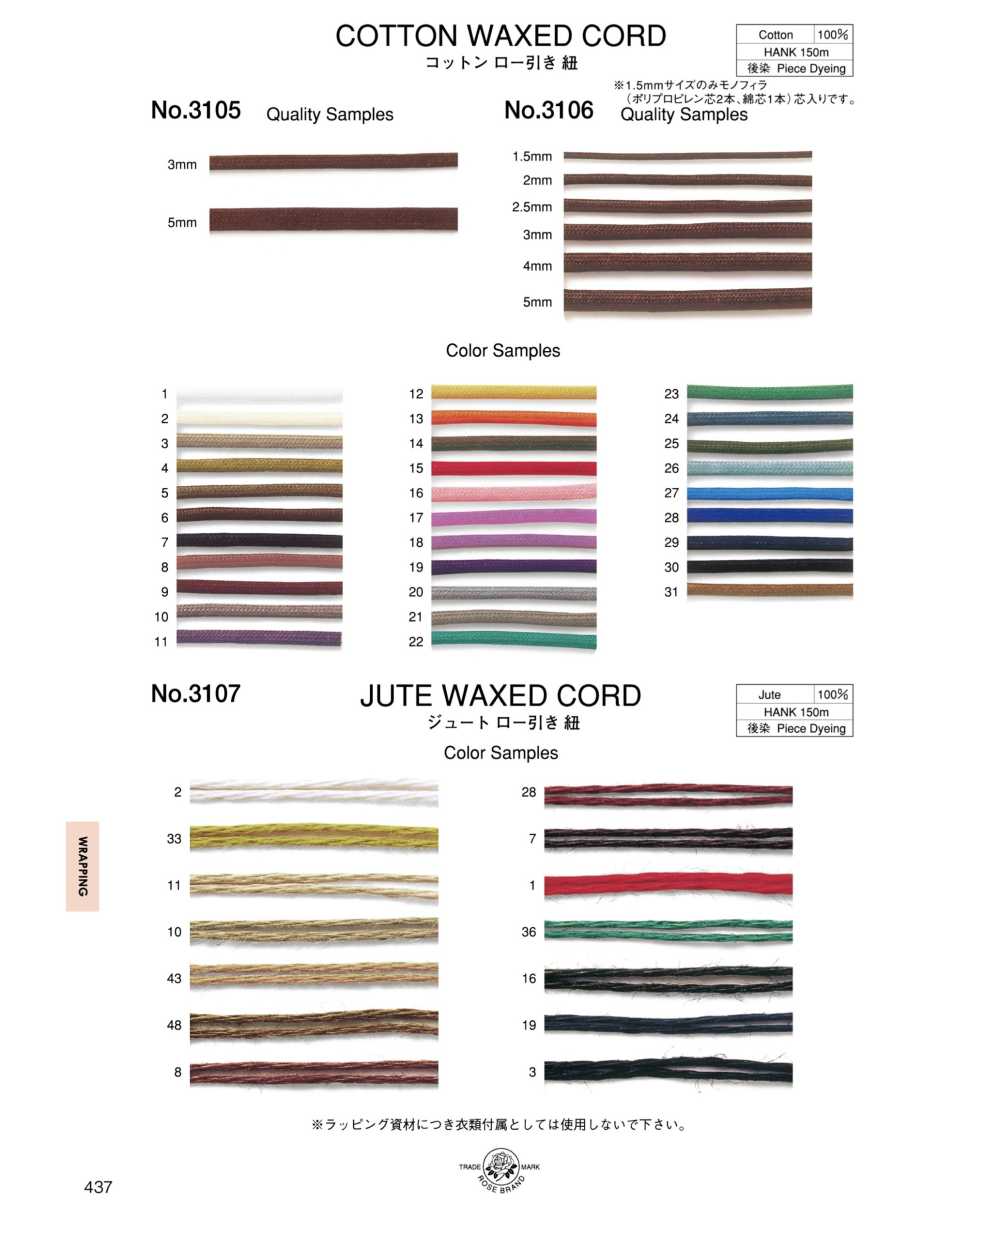 3105 Cotton Wax Flat Cord(Low Drawstring)[Ribbon Tape Cord] ROSE BRAND  (Marushin)/Okura Shoji Co., Ltd. - ApparelX